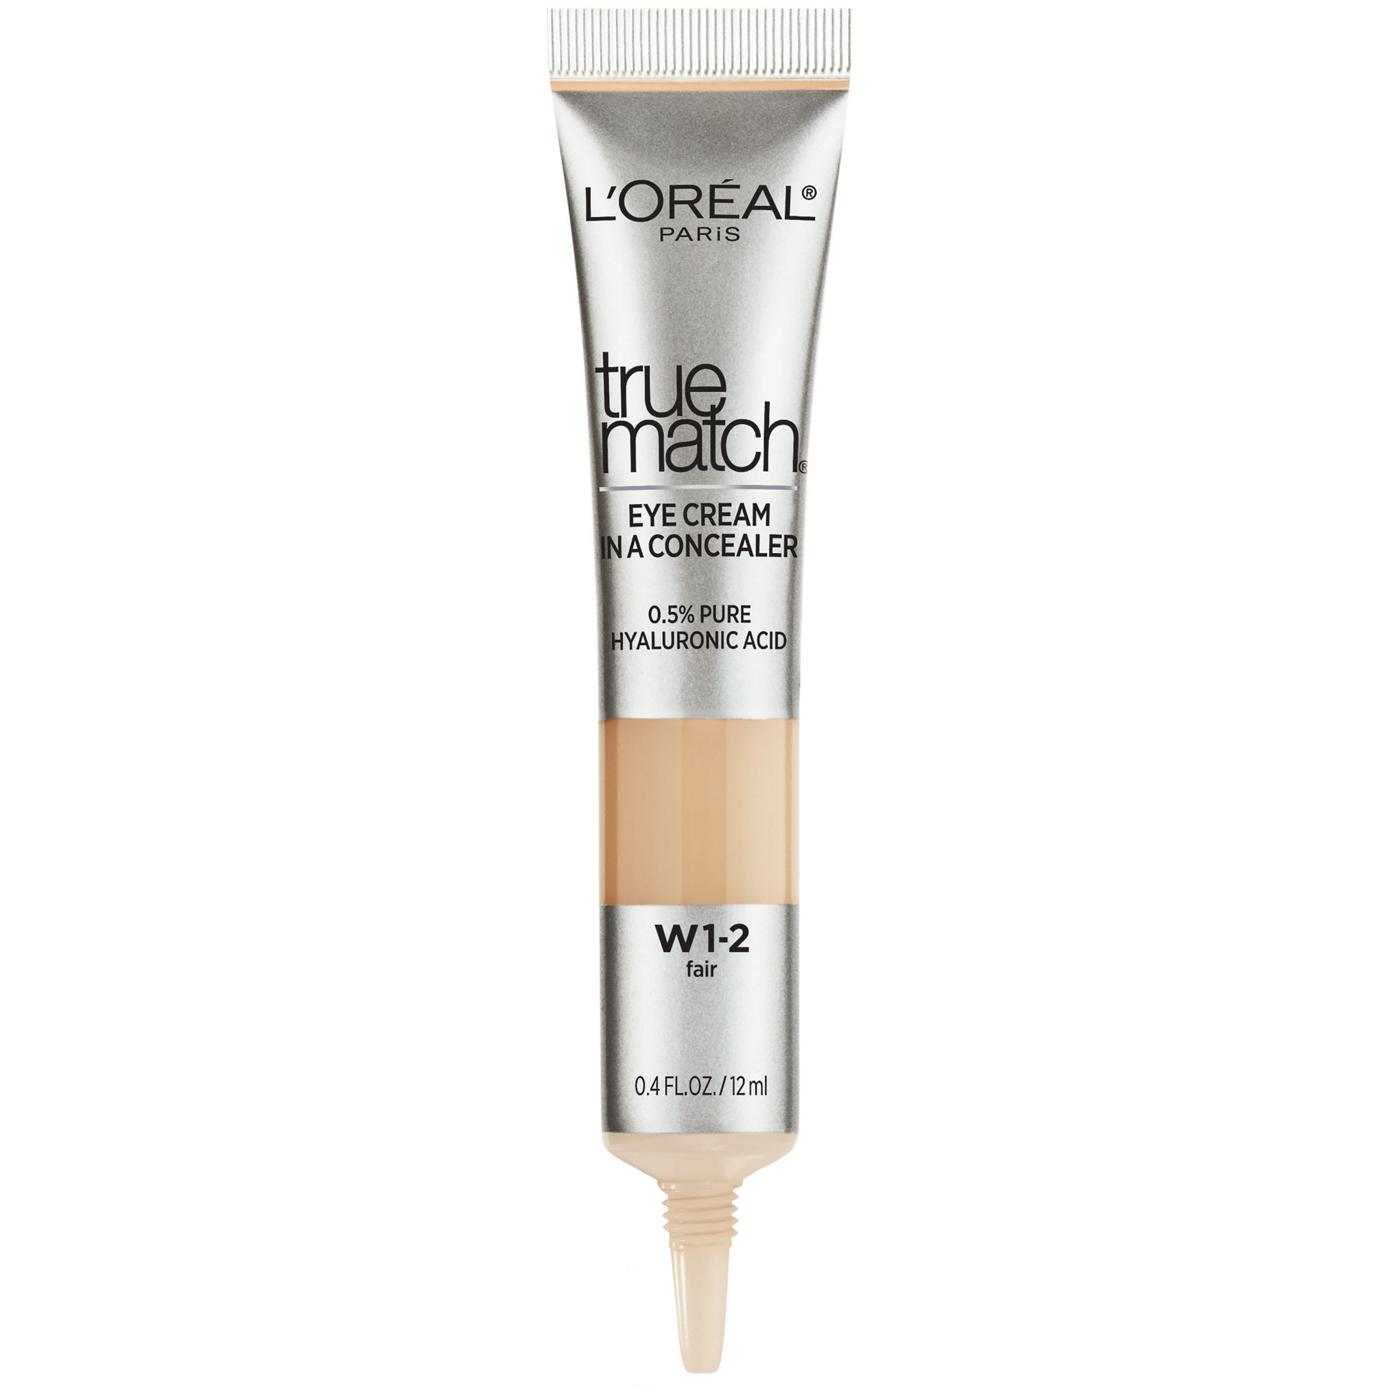 L'Oréal Paris True Match Eye Cream in a Concealer 0.5 percent hyaluronic acid Fair W1-2; image 6 of 7